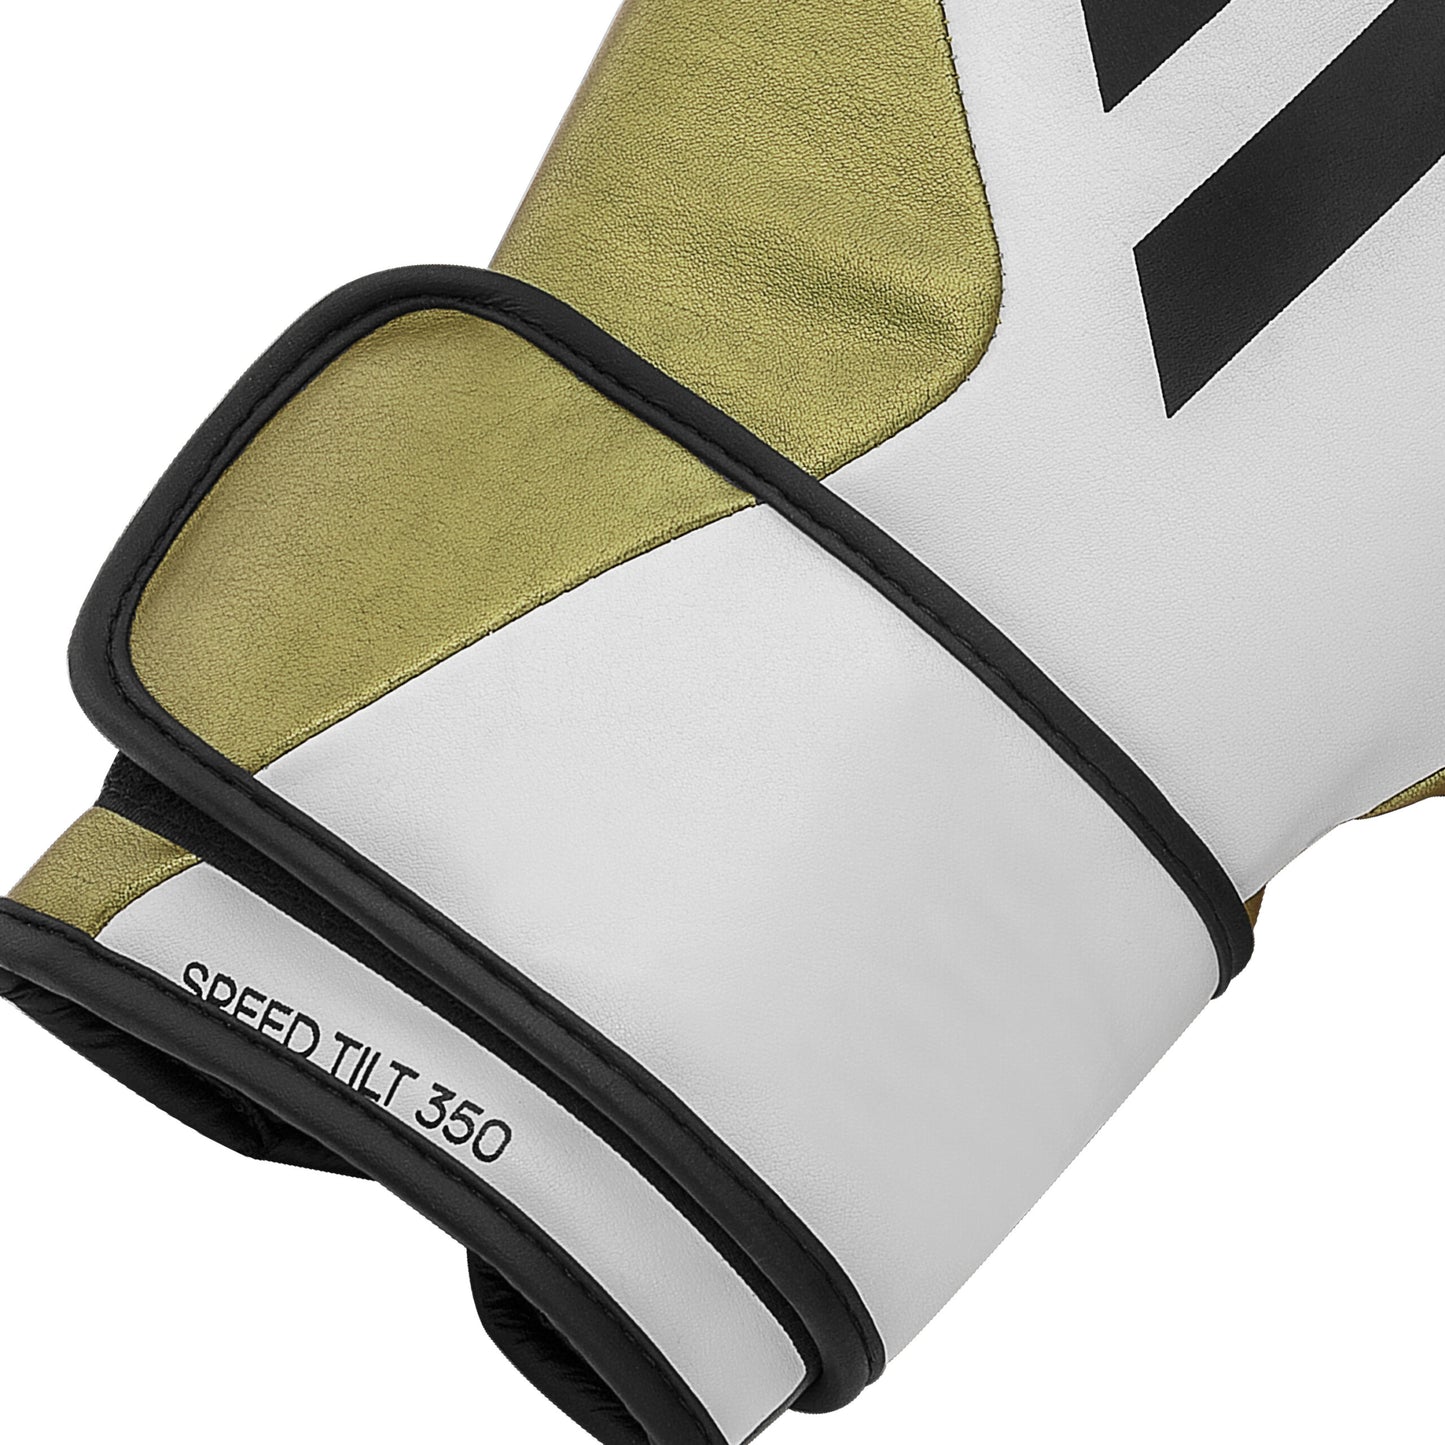 Adispd350tg Velcro White Gold Black Close Up 06